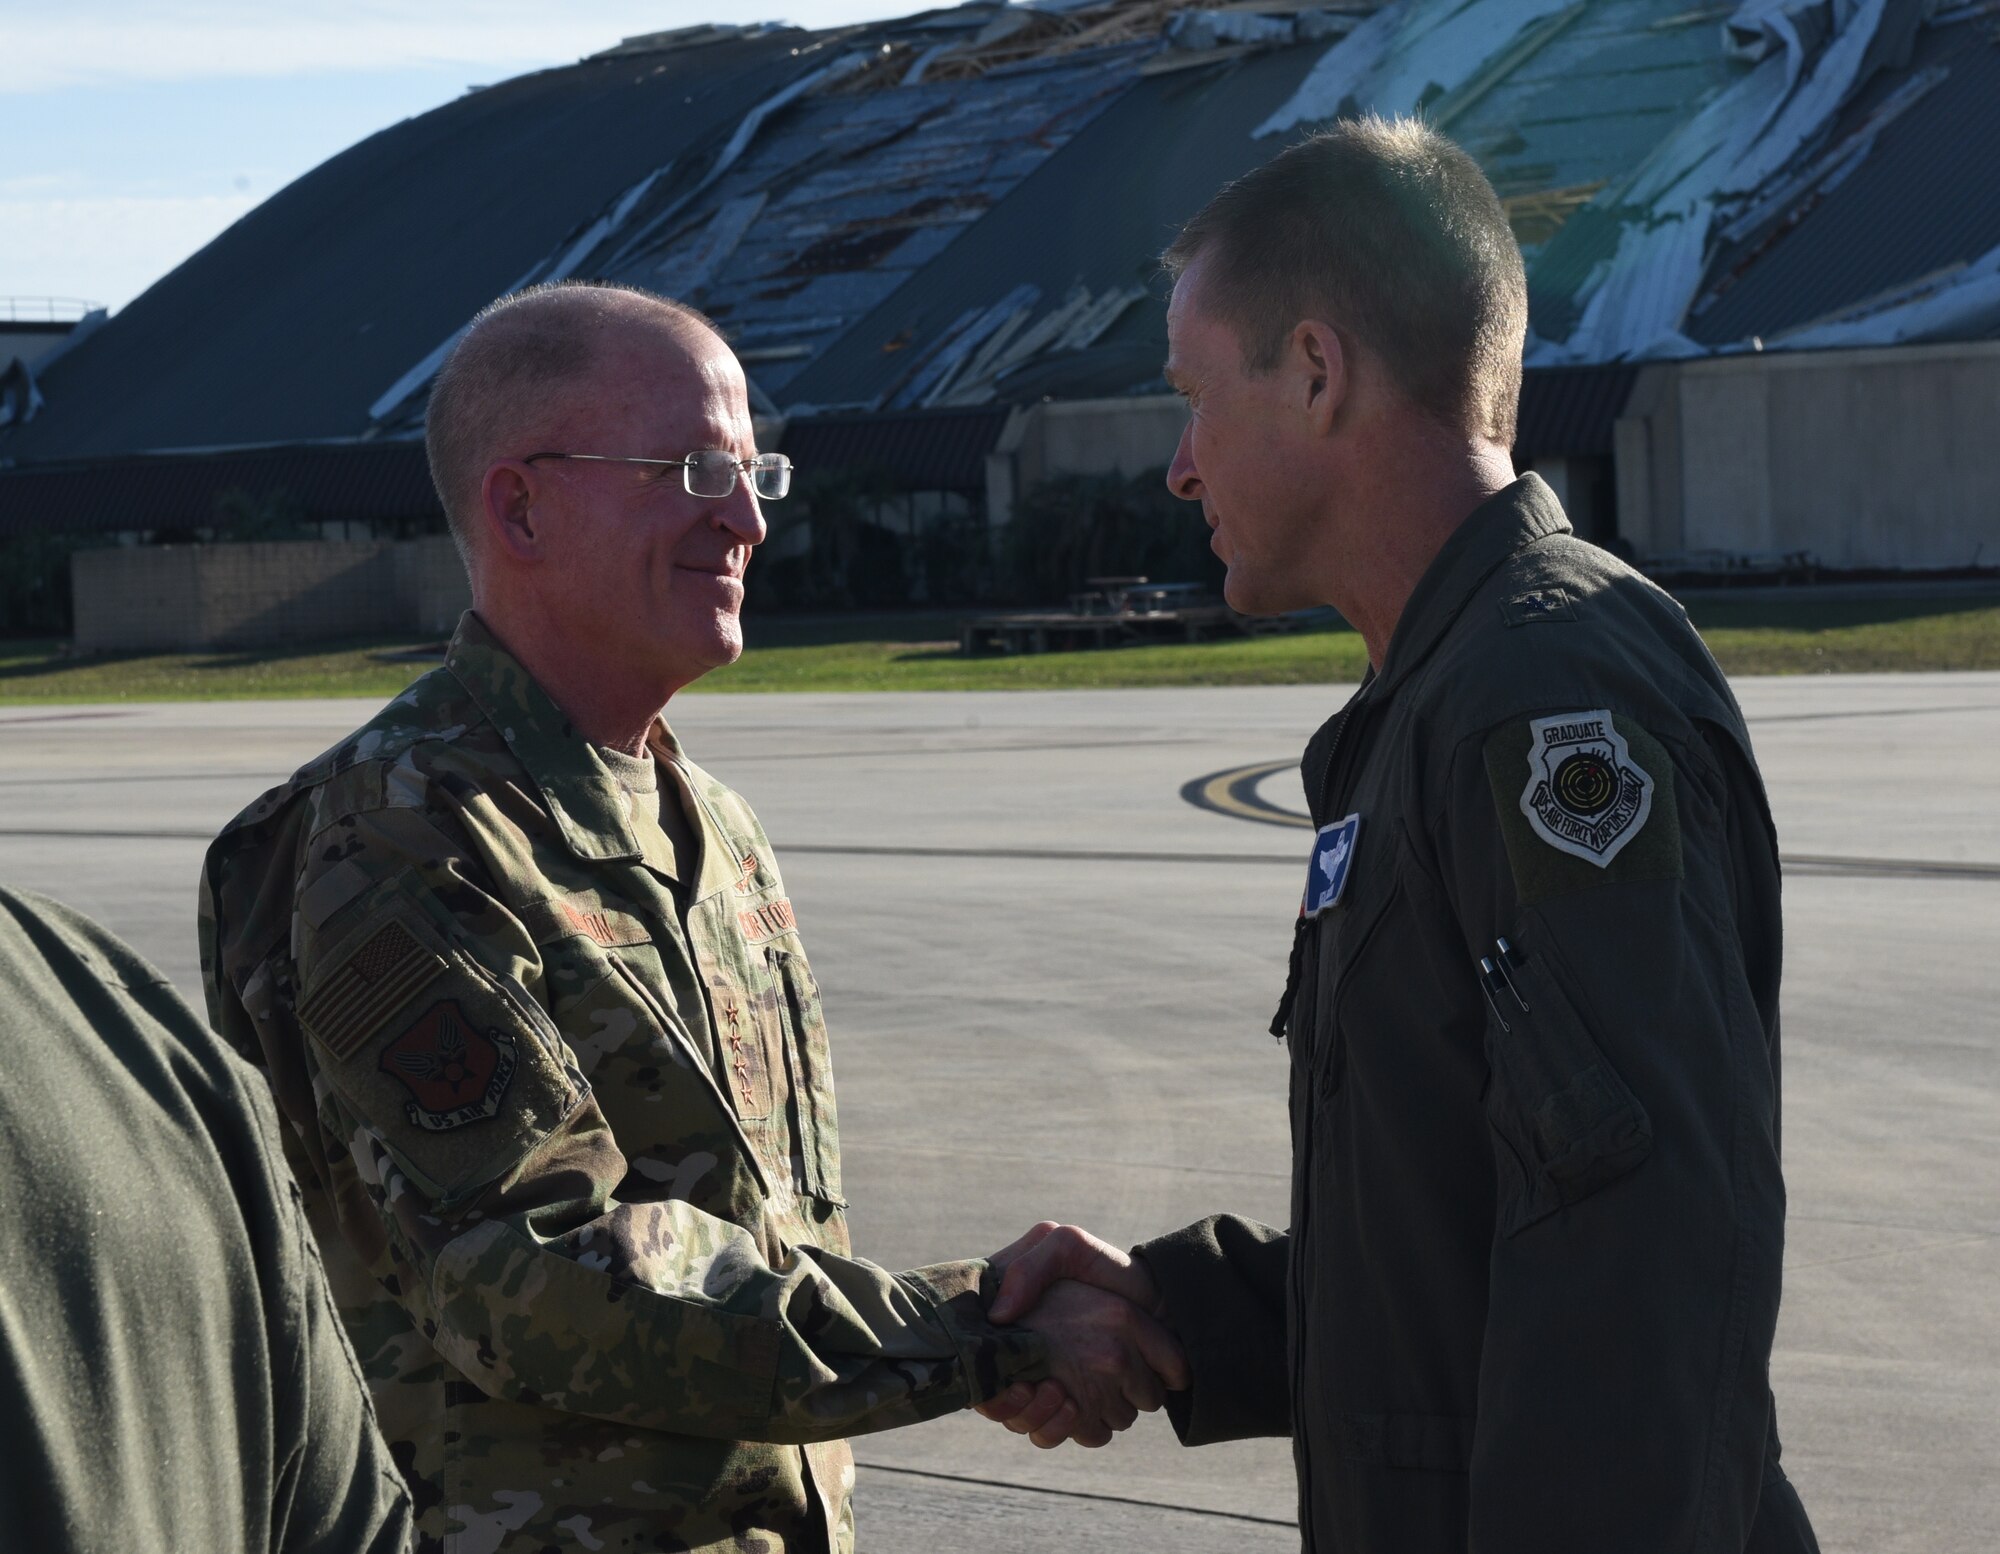 U.S. Air Force officials shake hands